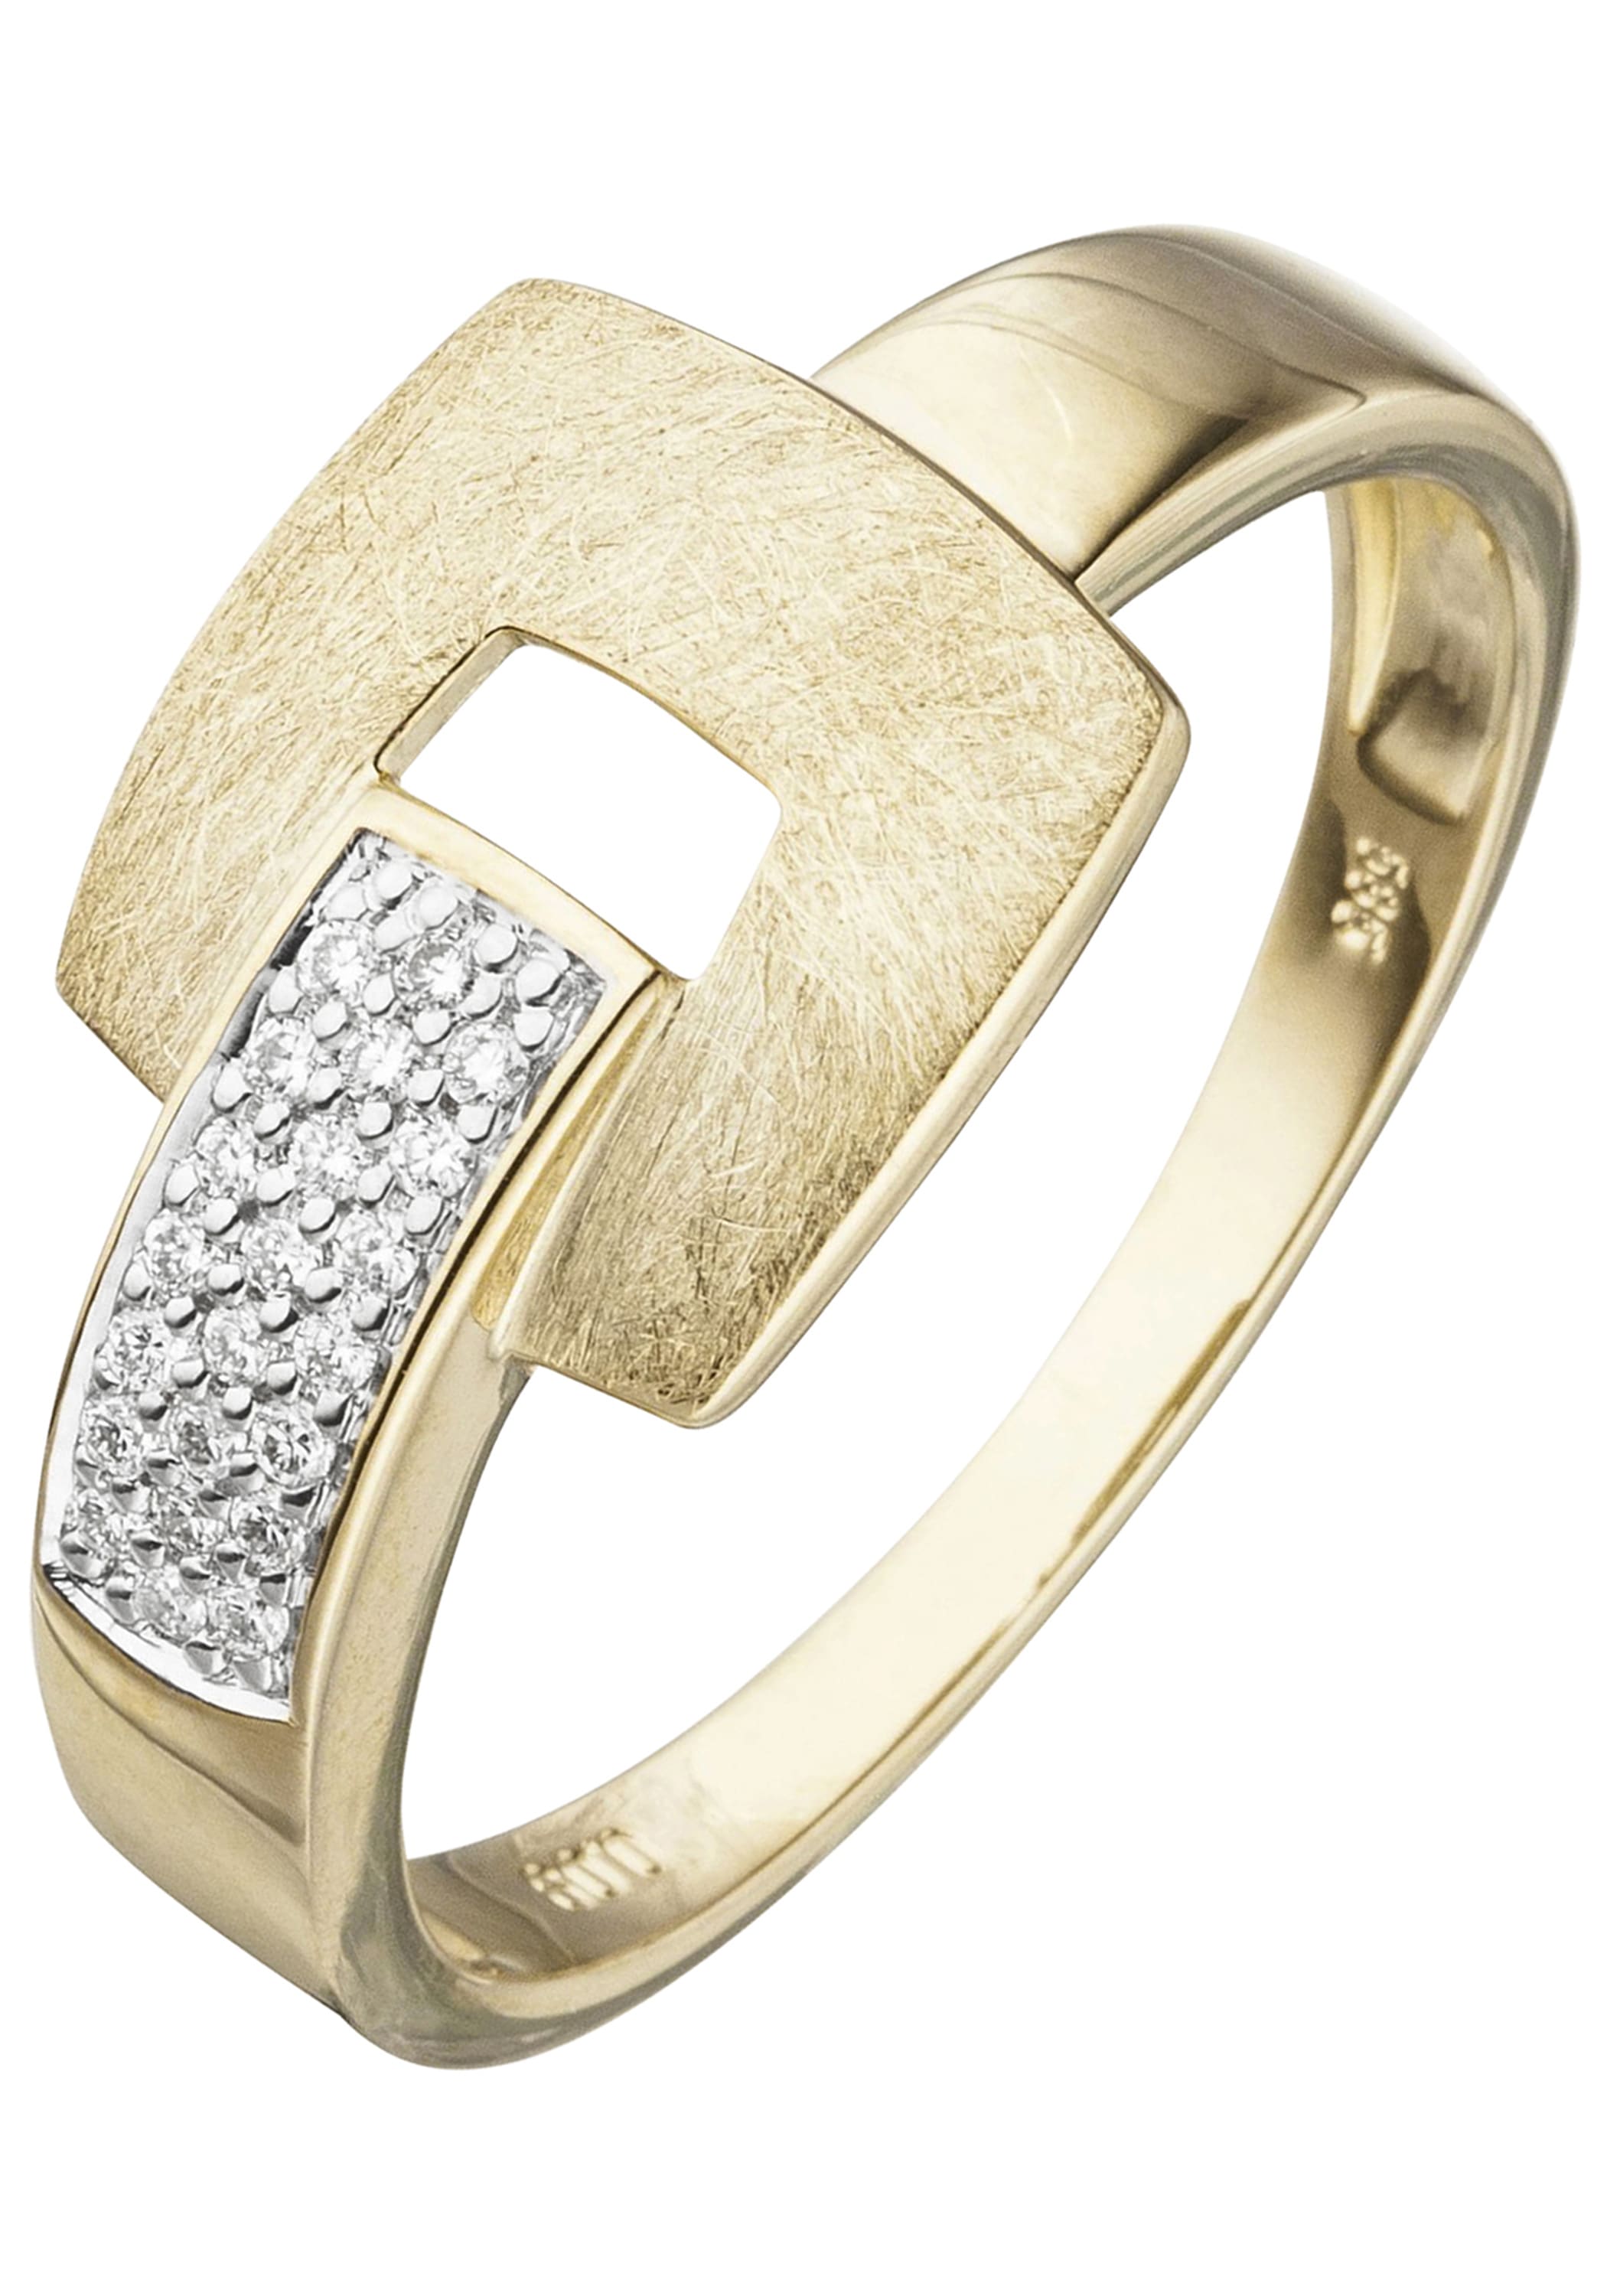 JOBO Fingerring, 585 Gold mit 22 Diamanten kaufen | BAUR